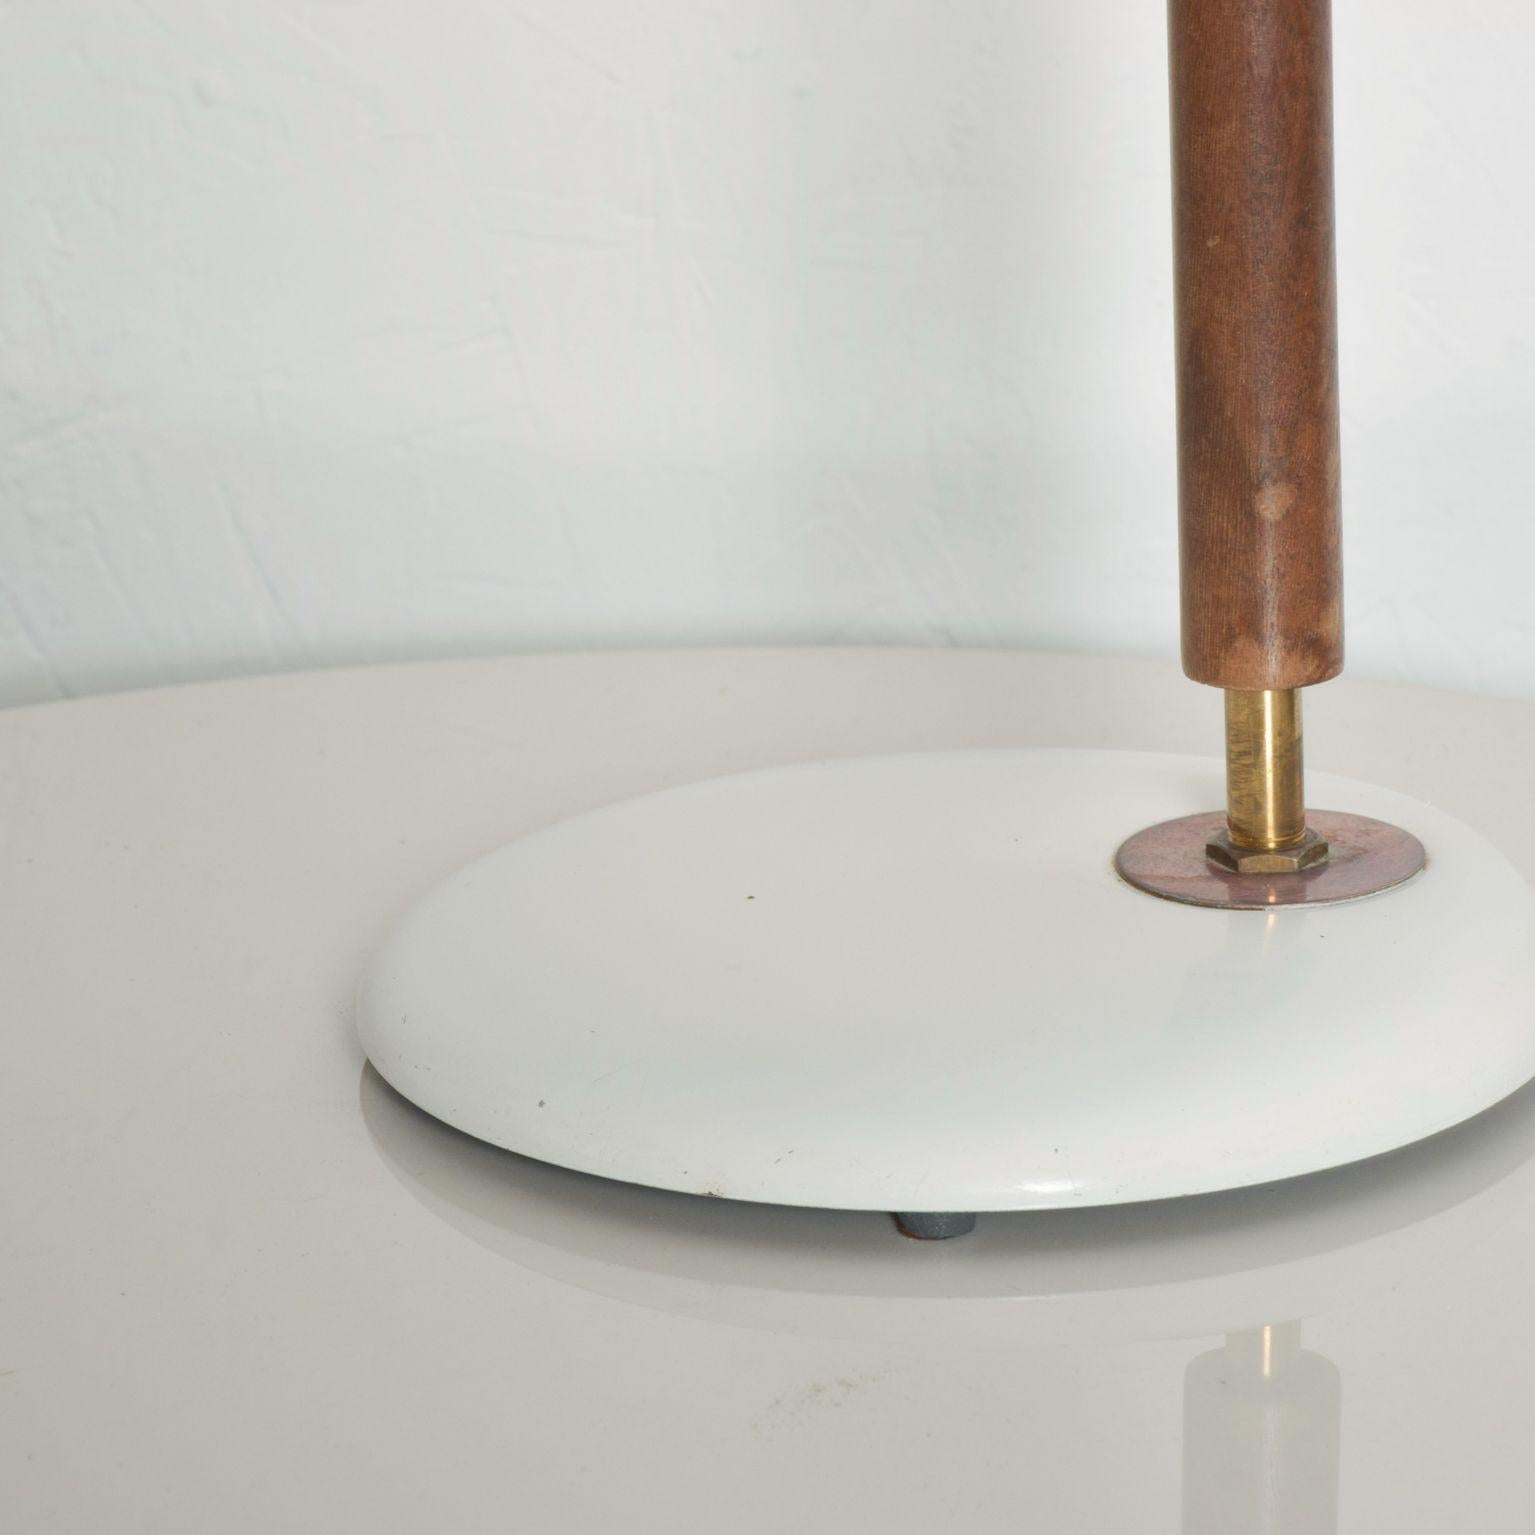 American Modern Midcentury Clamshell Table Desk Lamp by Gerald Thurston for Lightolier